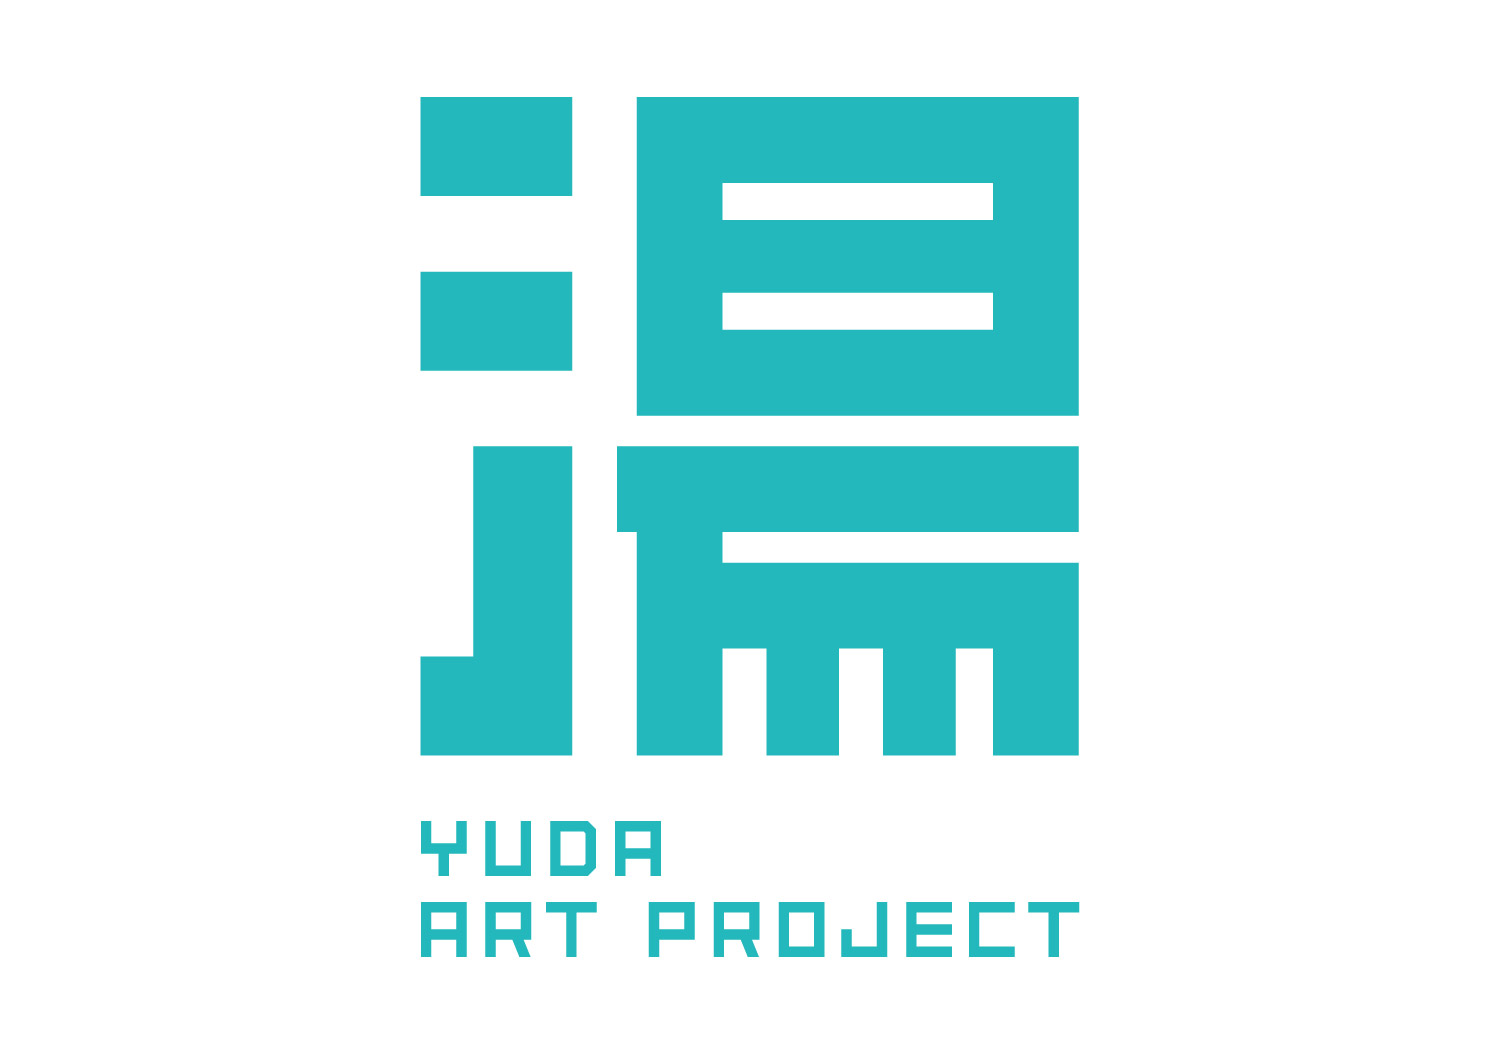 YUDA ART PROJECT_1